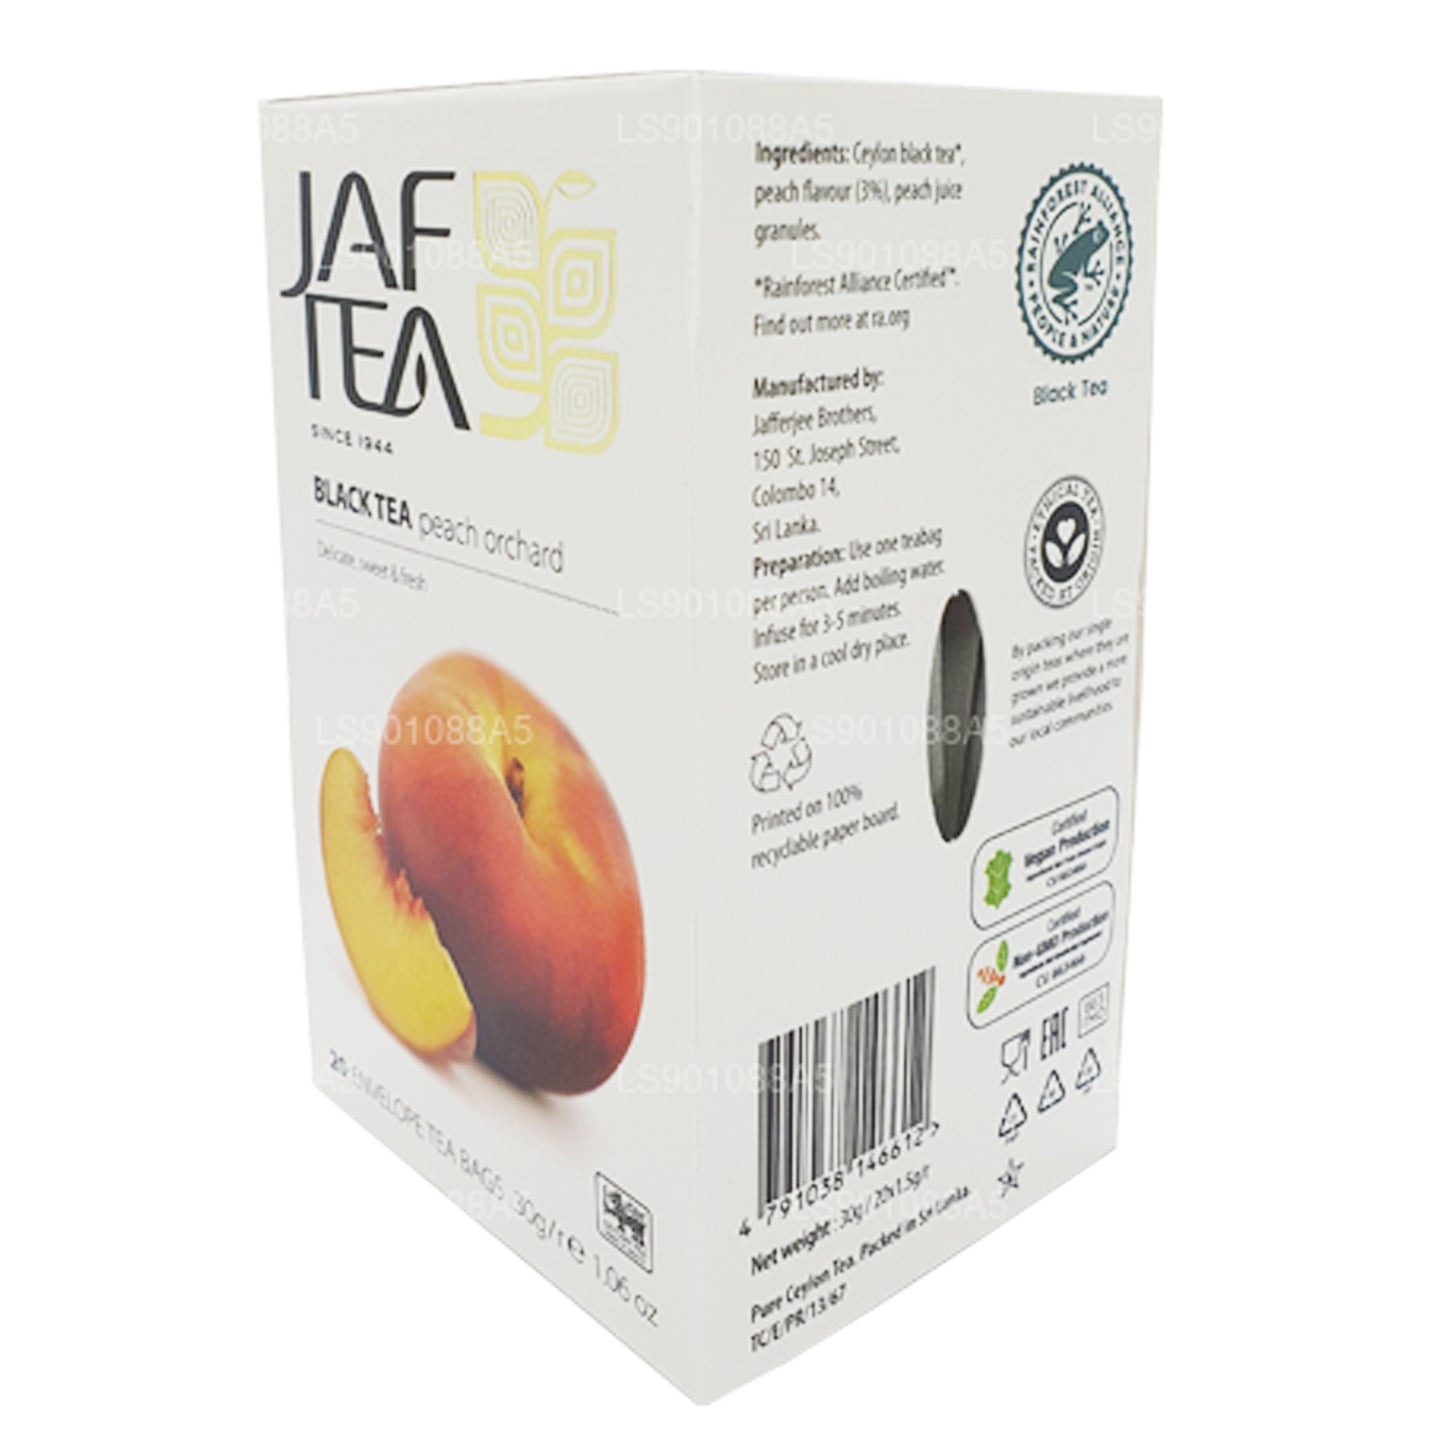 Jaf Tea Pure Fruits Kolekcja Czarna herbata Brzoskwinia Sad (30g) 20 torebek